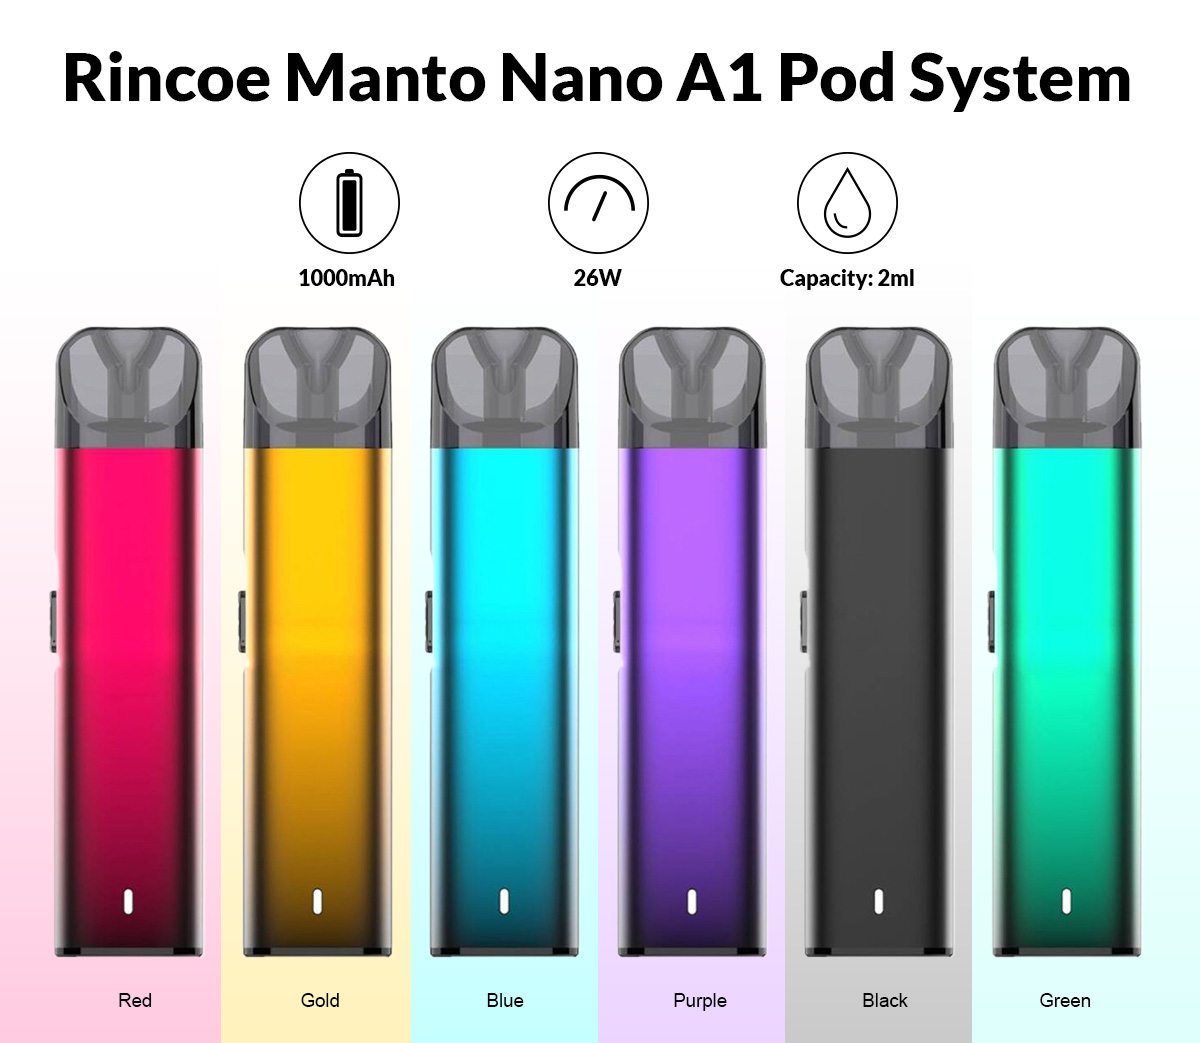 Rincoe Manto Nano A1 hot sale